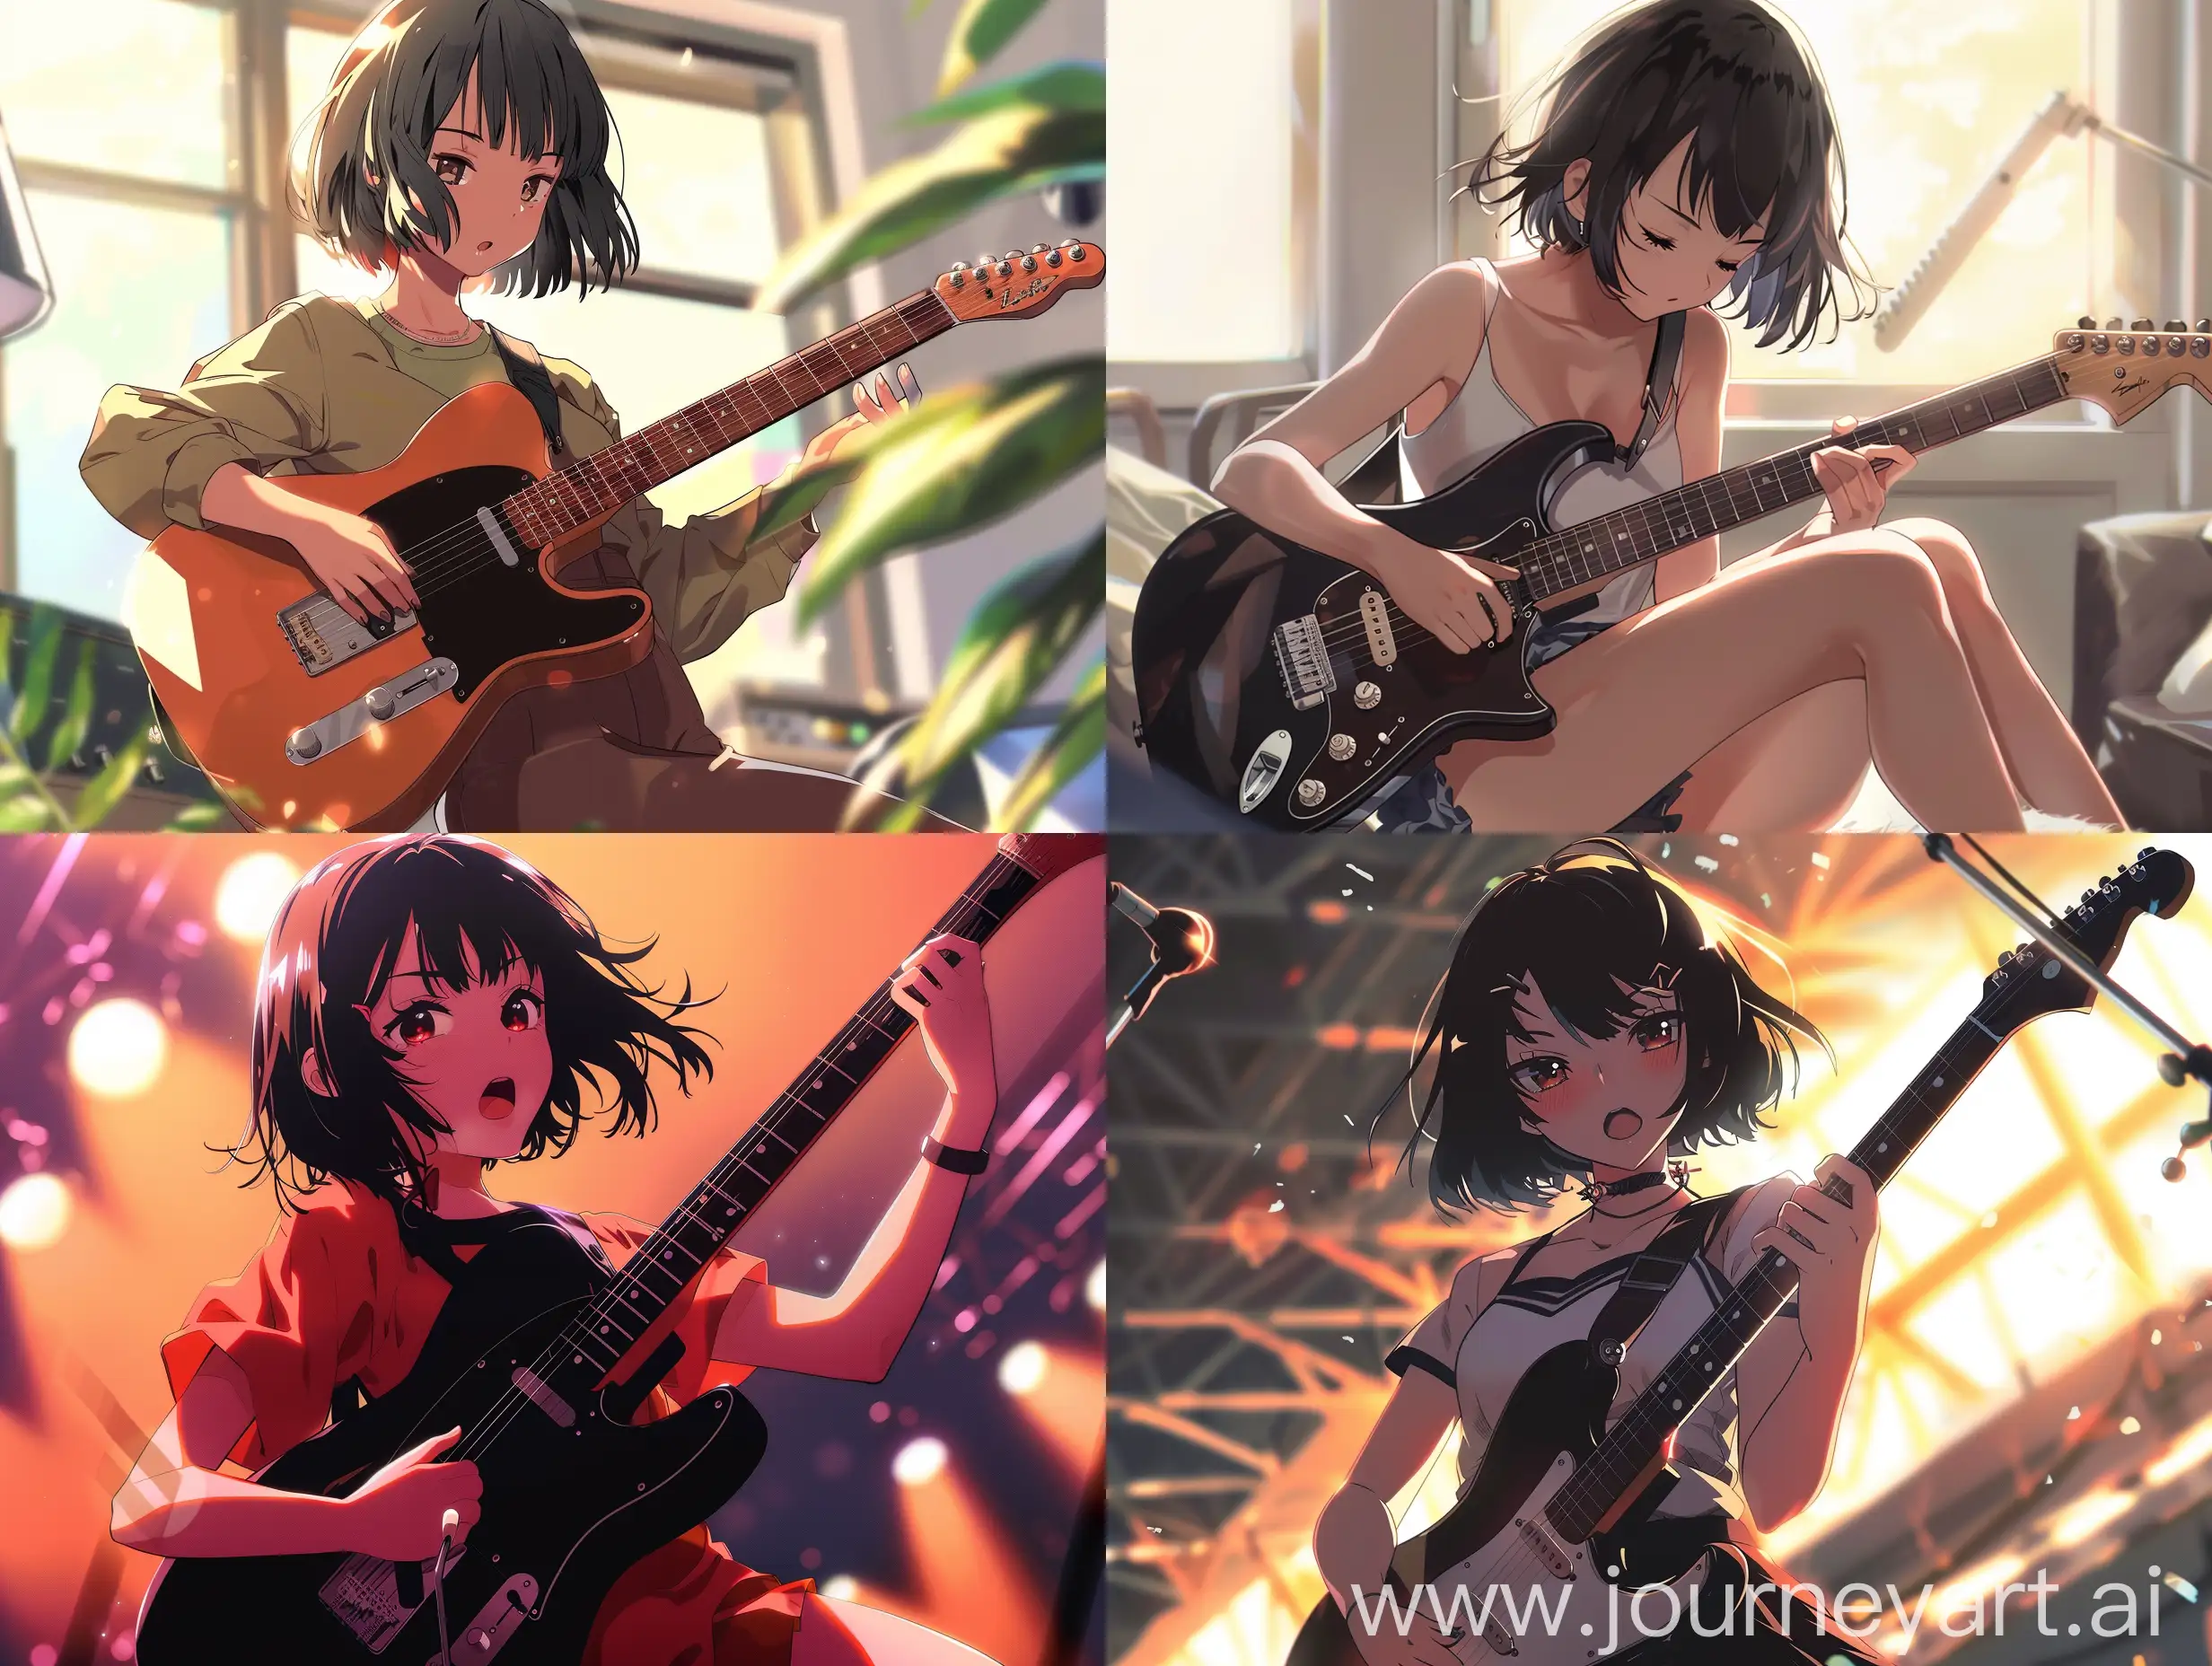 Anime girl with short black hair plays guitar